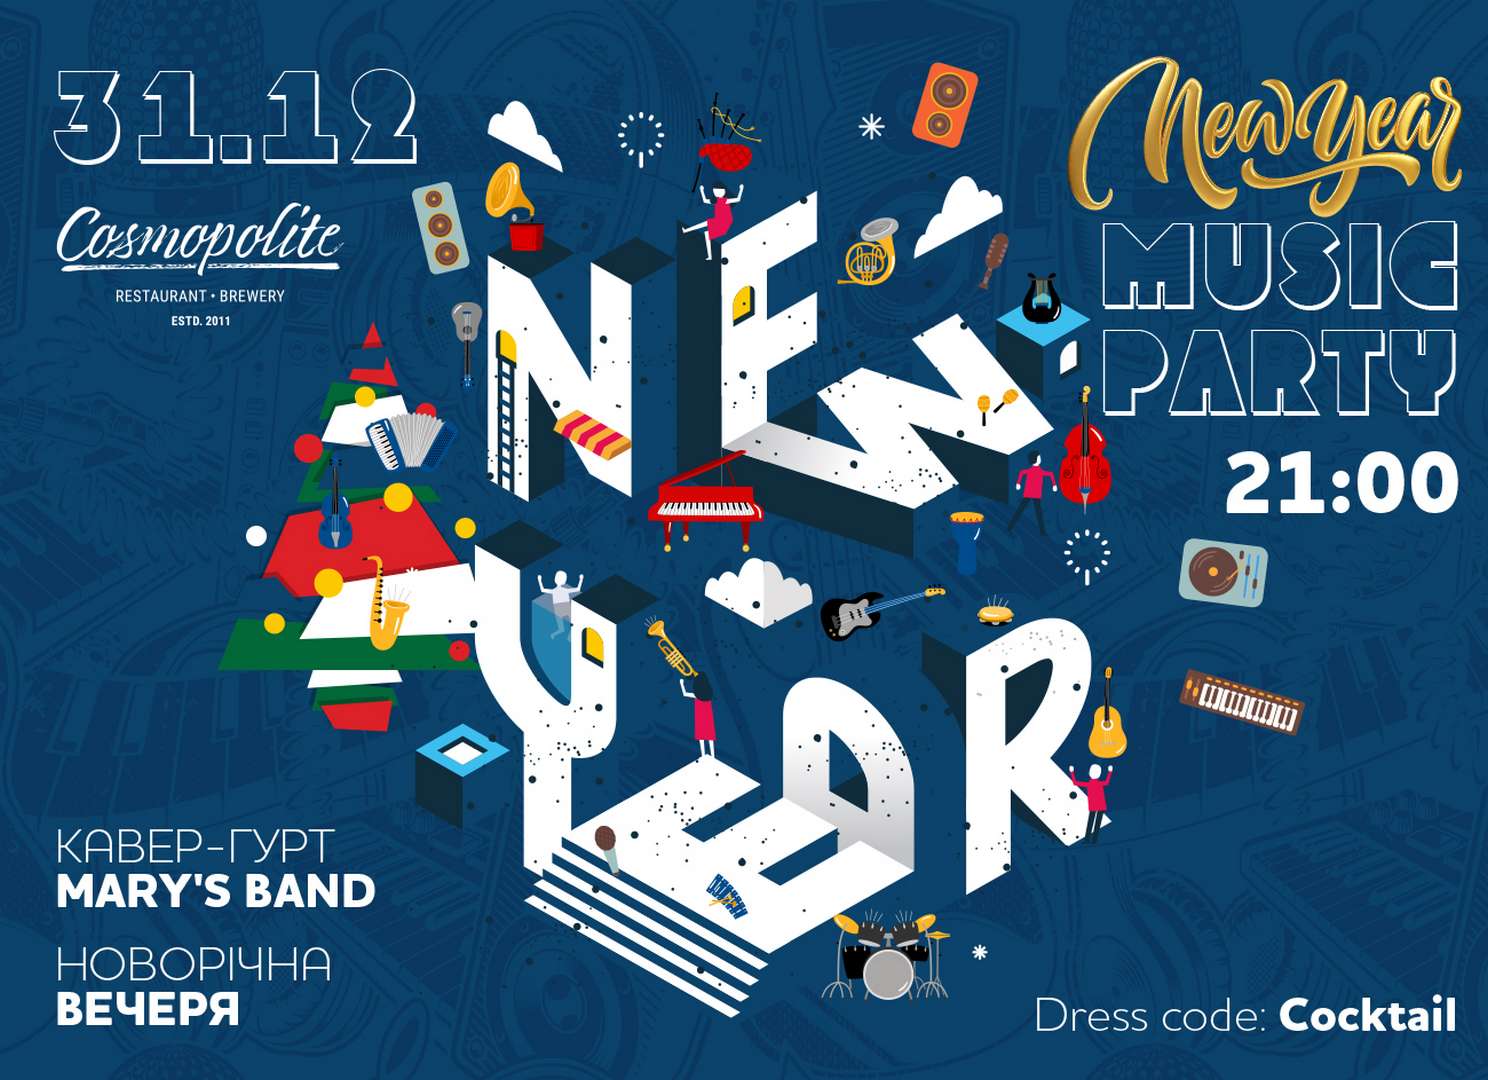 New Year Music Party 2021: пропозиція для гостей готелю Mercure